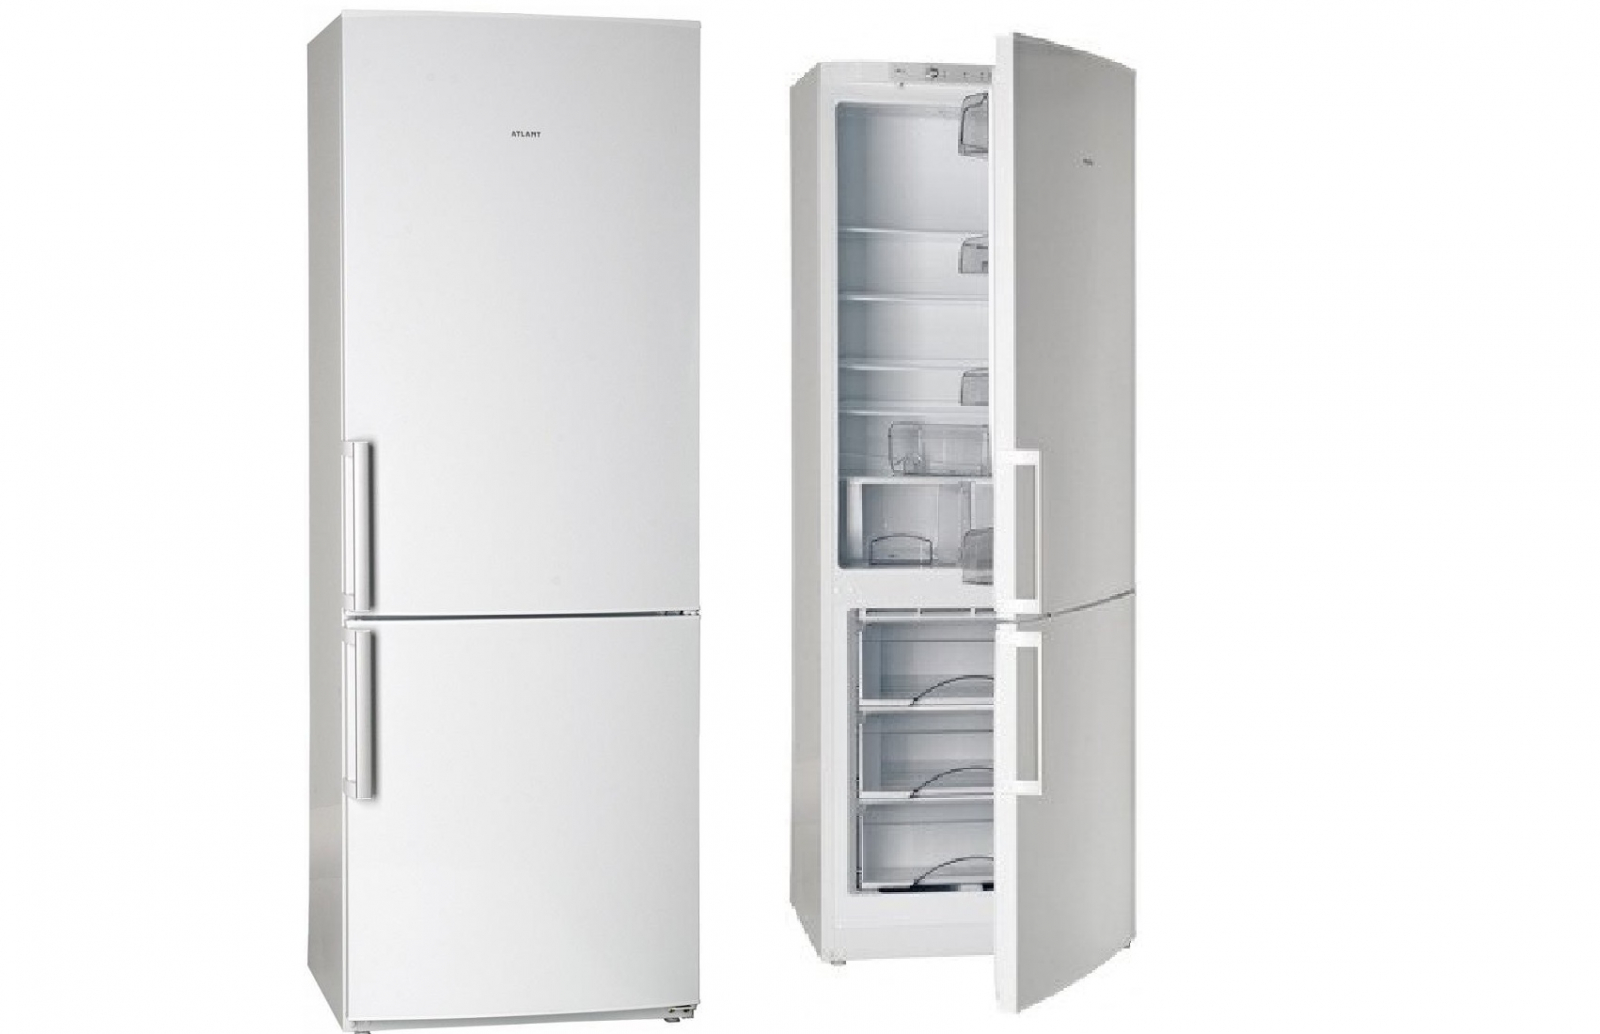 холодильник atlant xm 6224-100, купить в Красноярске холодильник atlant xm 6224-100,  купить в Красноярске дешево холодильник atlant xm 6224-100, купить в Красноярске минимальной цене холодильник atlant xm 6224-100